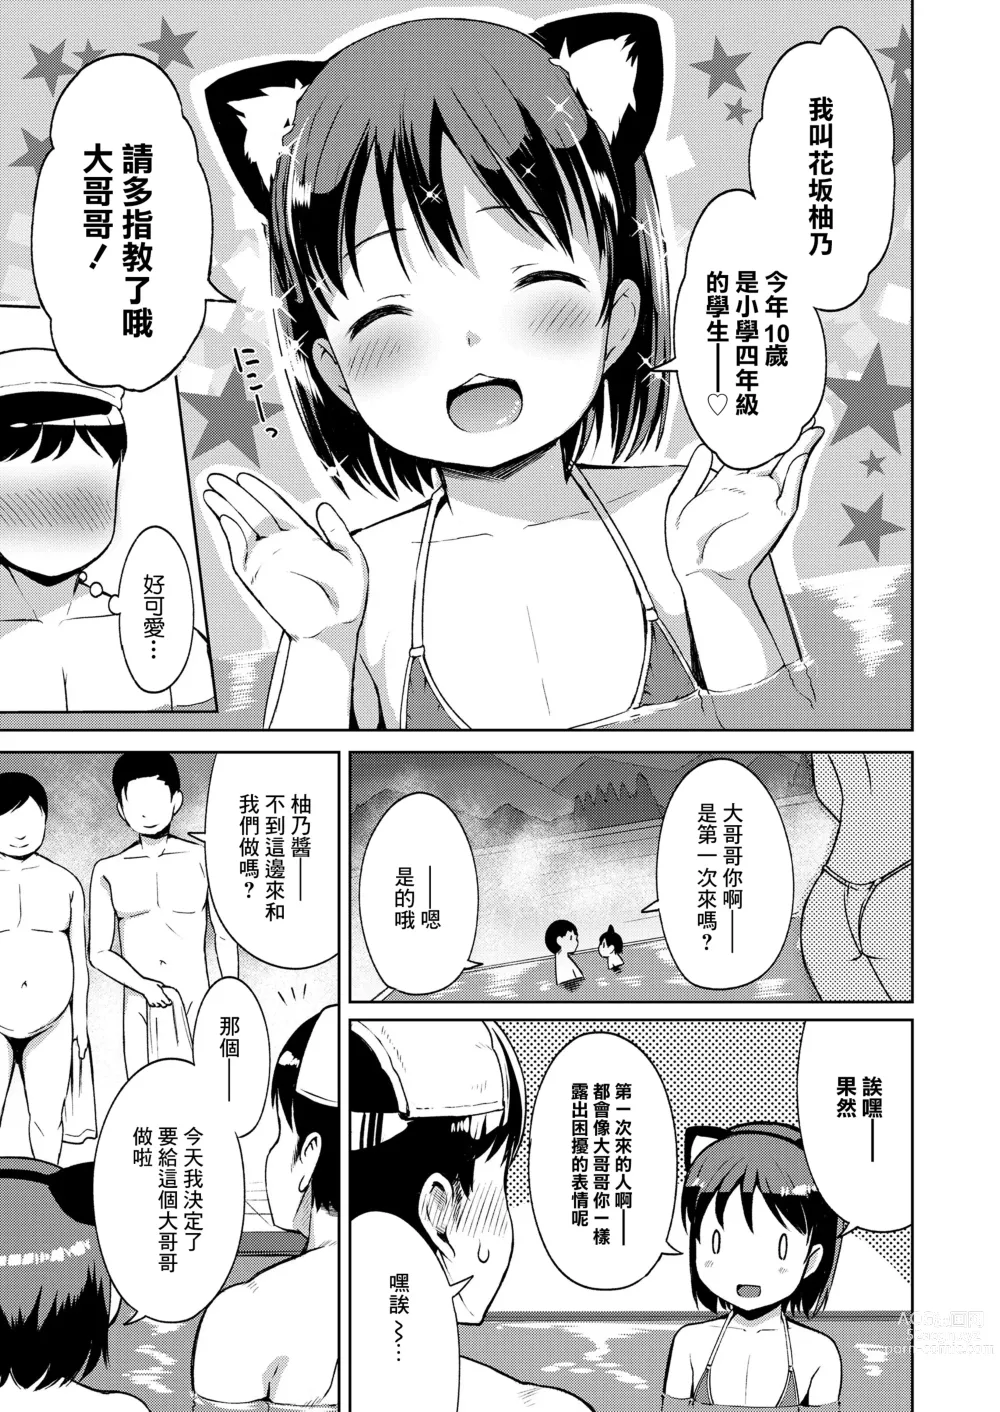 Page 5 of manga Yuno-chan Play